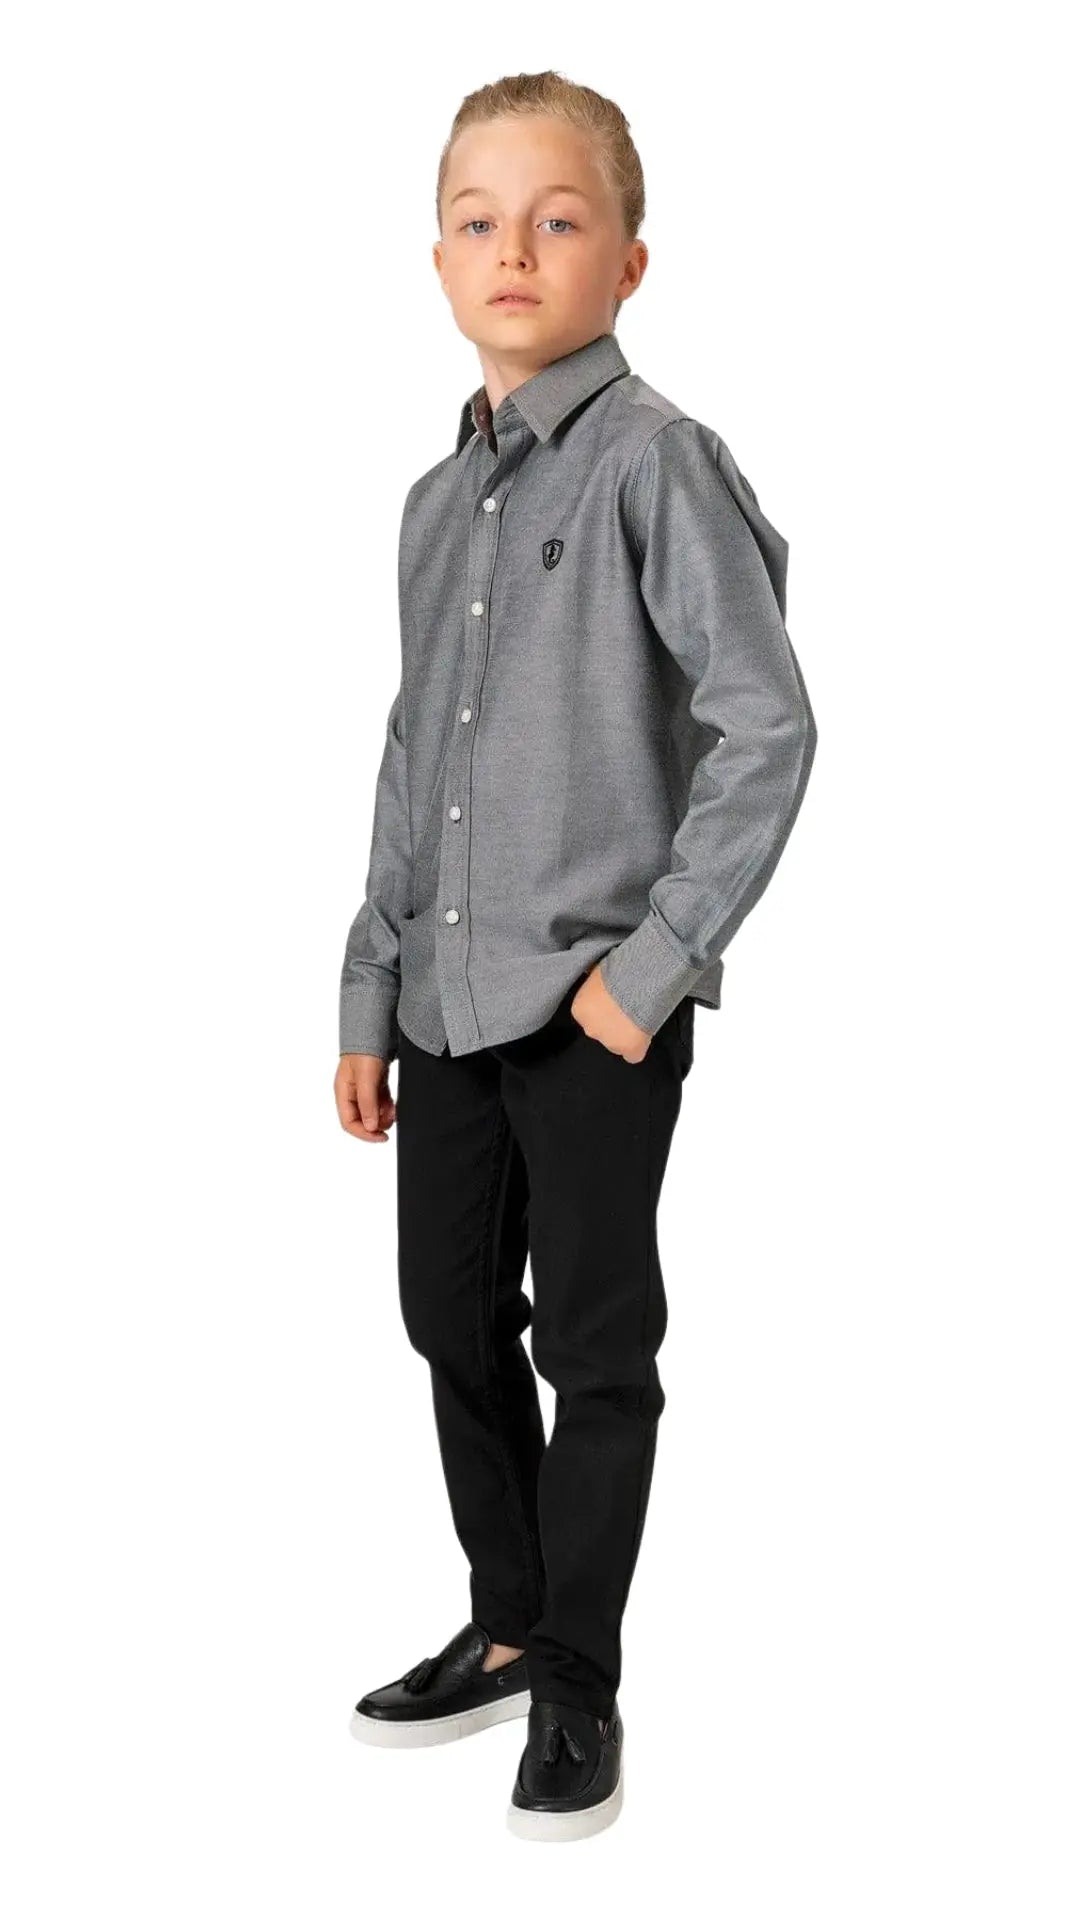 InCity Boys Tween 7-14 Years Black Long Sleeve Button-Down Fashion Shaun Dress Shirt InCity Boys & Girls